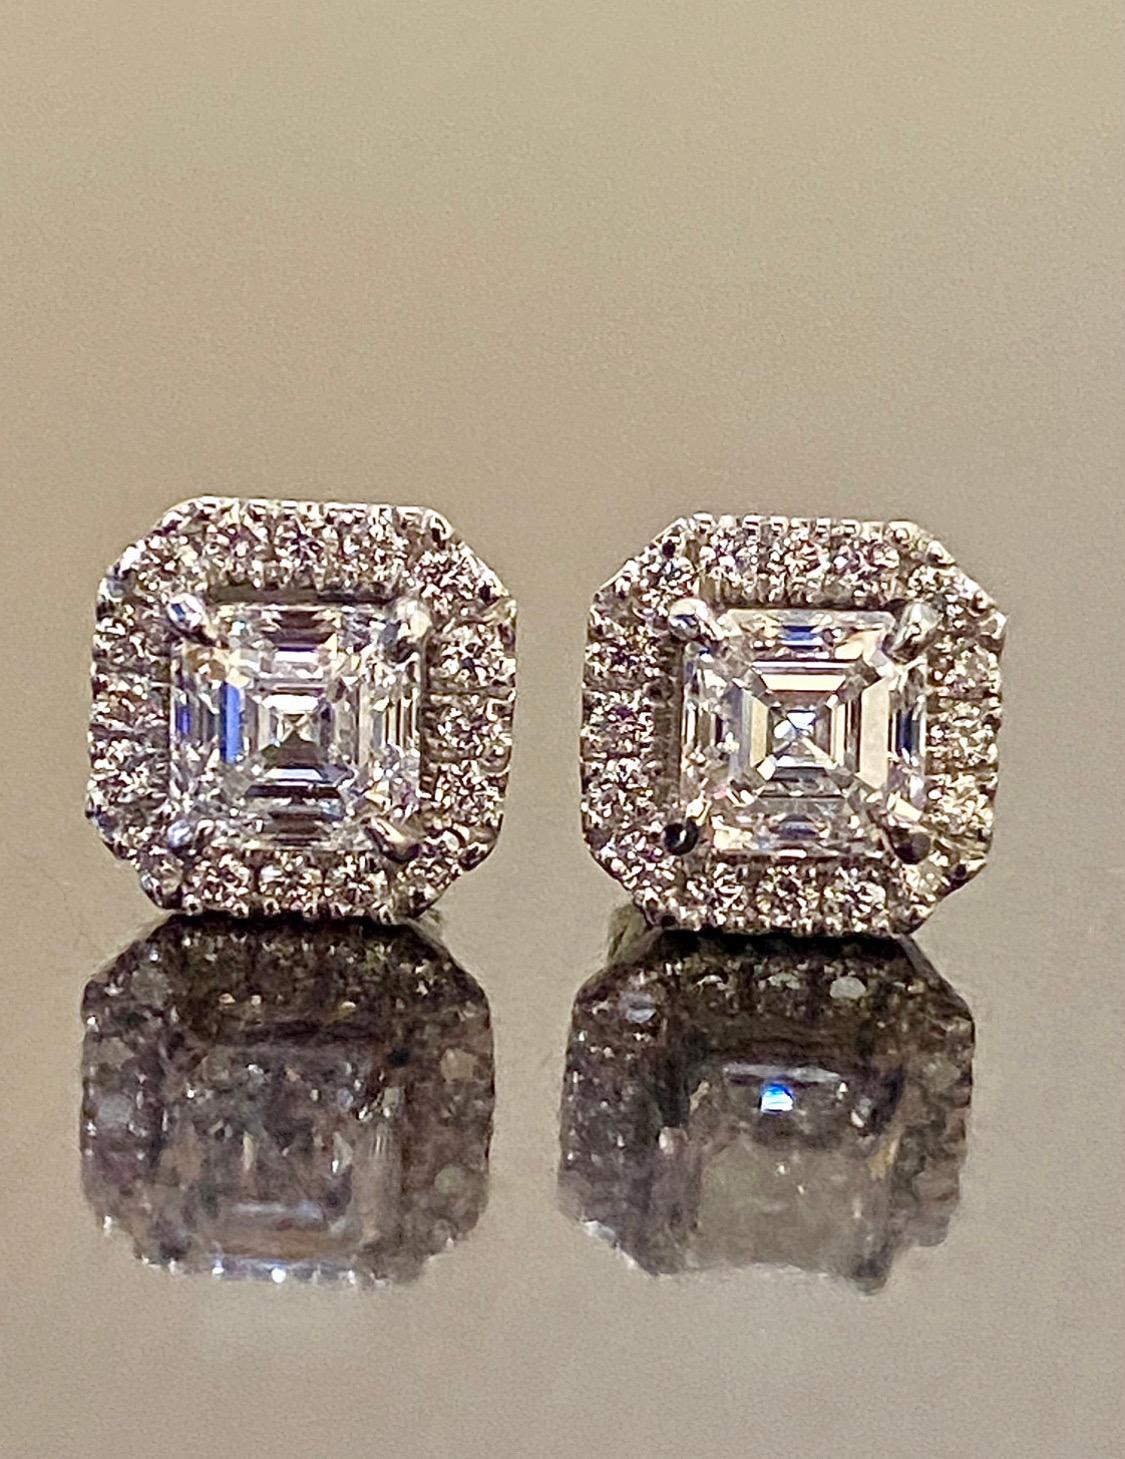 DeKara Designs Collection

Metal- 90% Platinum, 10% Iridium.

Stones- 2 GIA Certified Asscher Cut Diamonds F Color SI1 Clarity 1.01 Carat and 1.00 Carat, 32 Round Diamonds F-G Color VS2-SI1 Clarity, 0.35 Carats.

1.01 F SI1 GIA Report Number